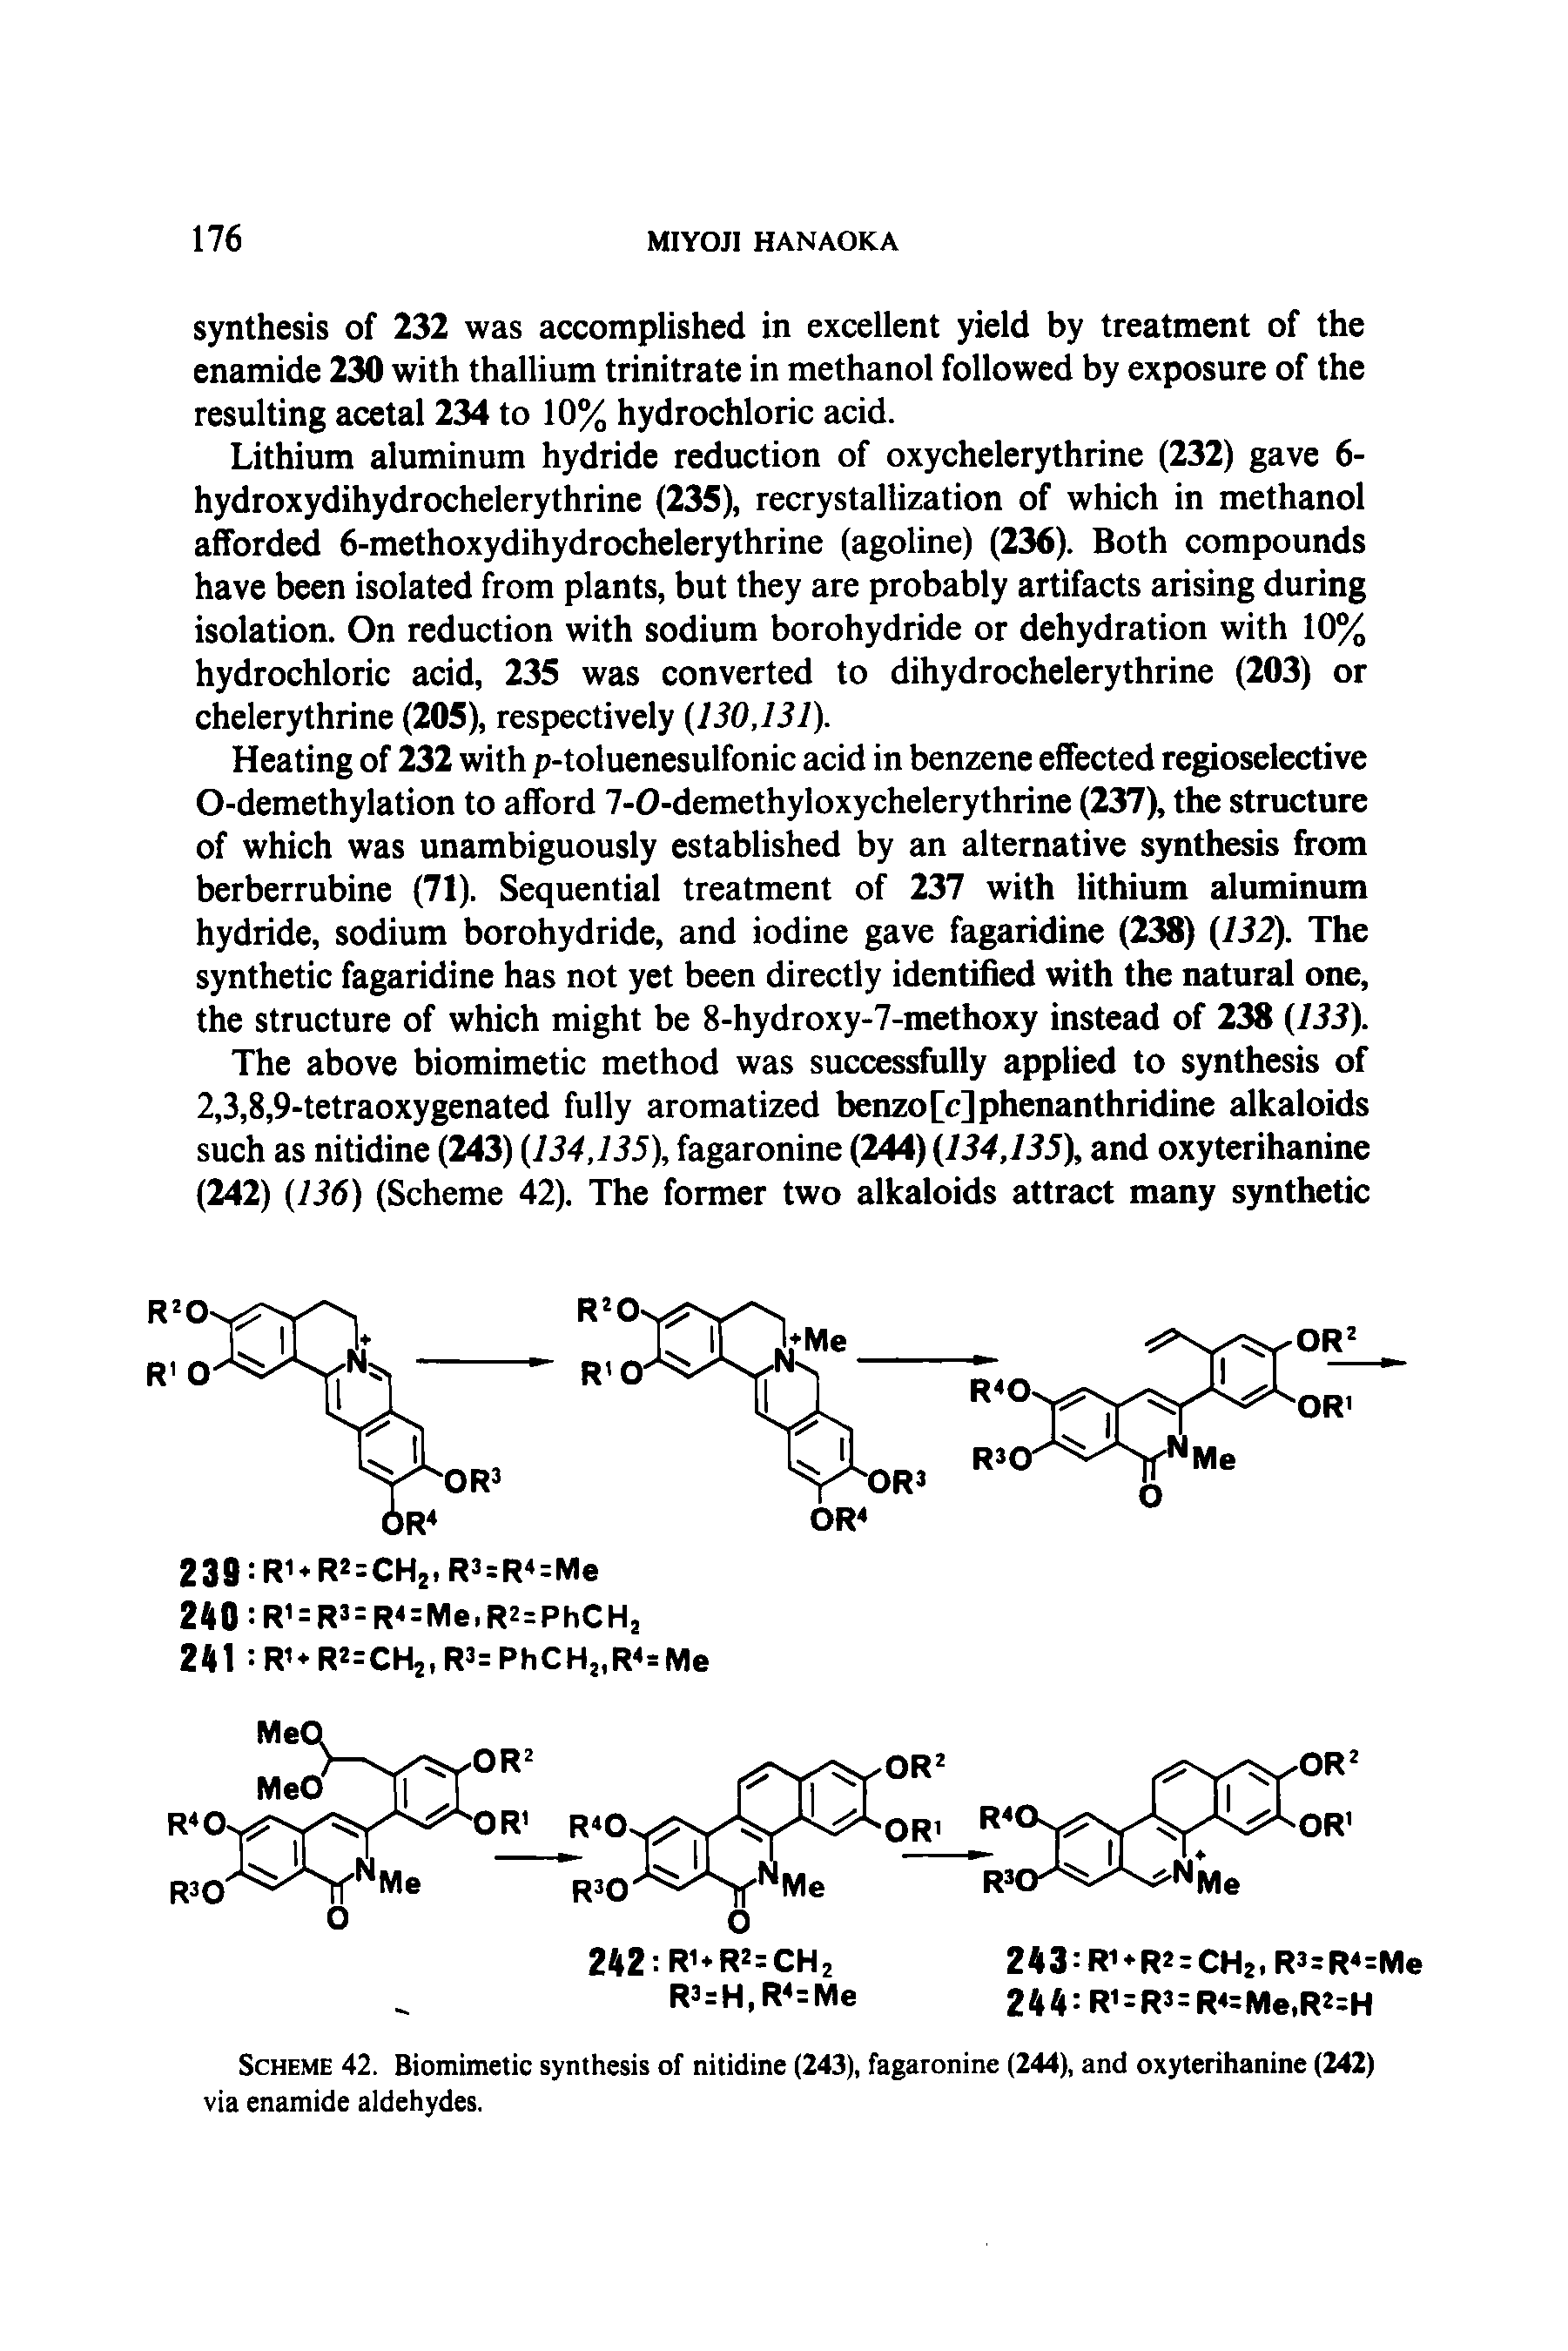 Scheme 42. Biomimetic synthesis of nitidine (243), fagaronine (244), and oxyterihanine (242) via enamide aldehydes.